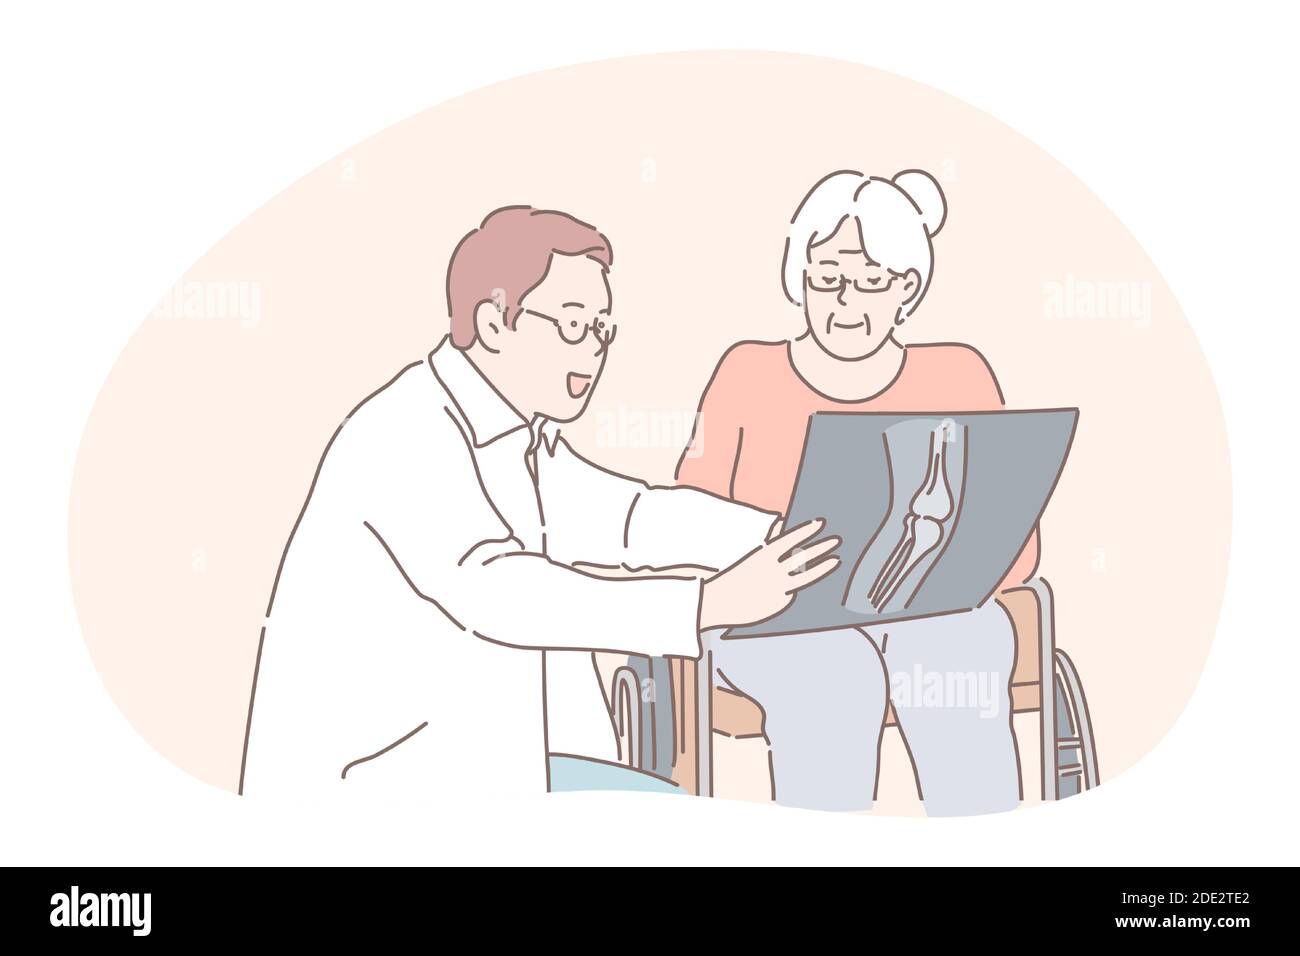 Communication between doctor and patient, medicare, injury, arthritis concept. Positive man doctor cartoon characters showing senior woman patient in Stock Vector